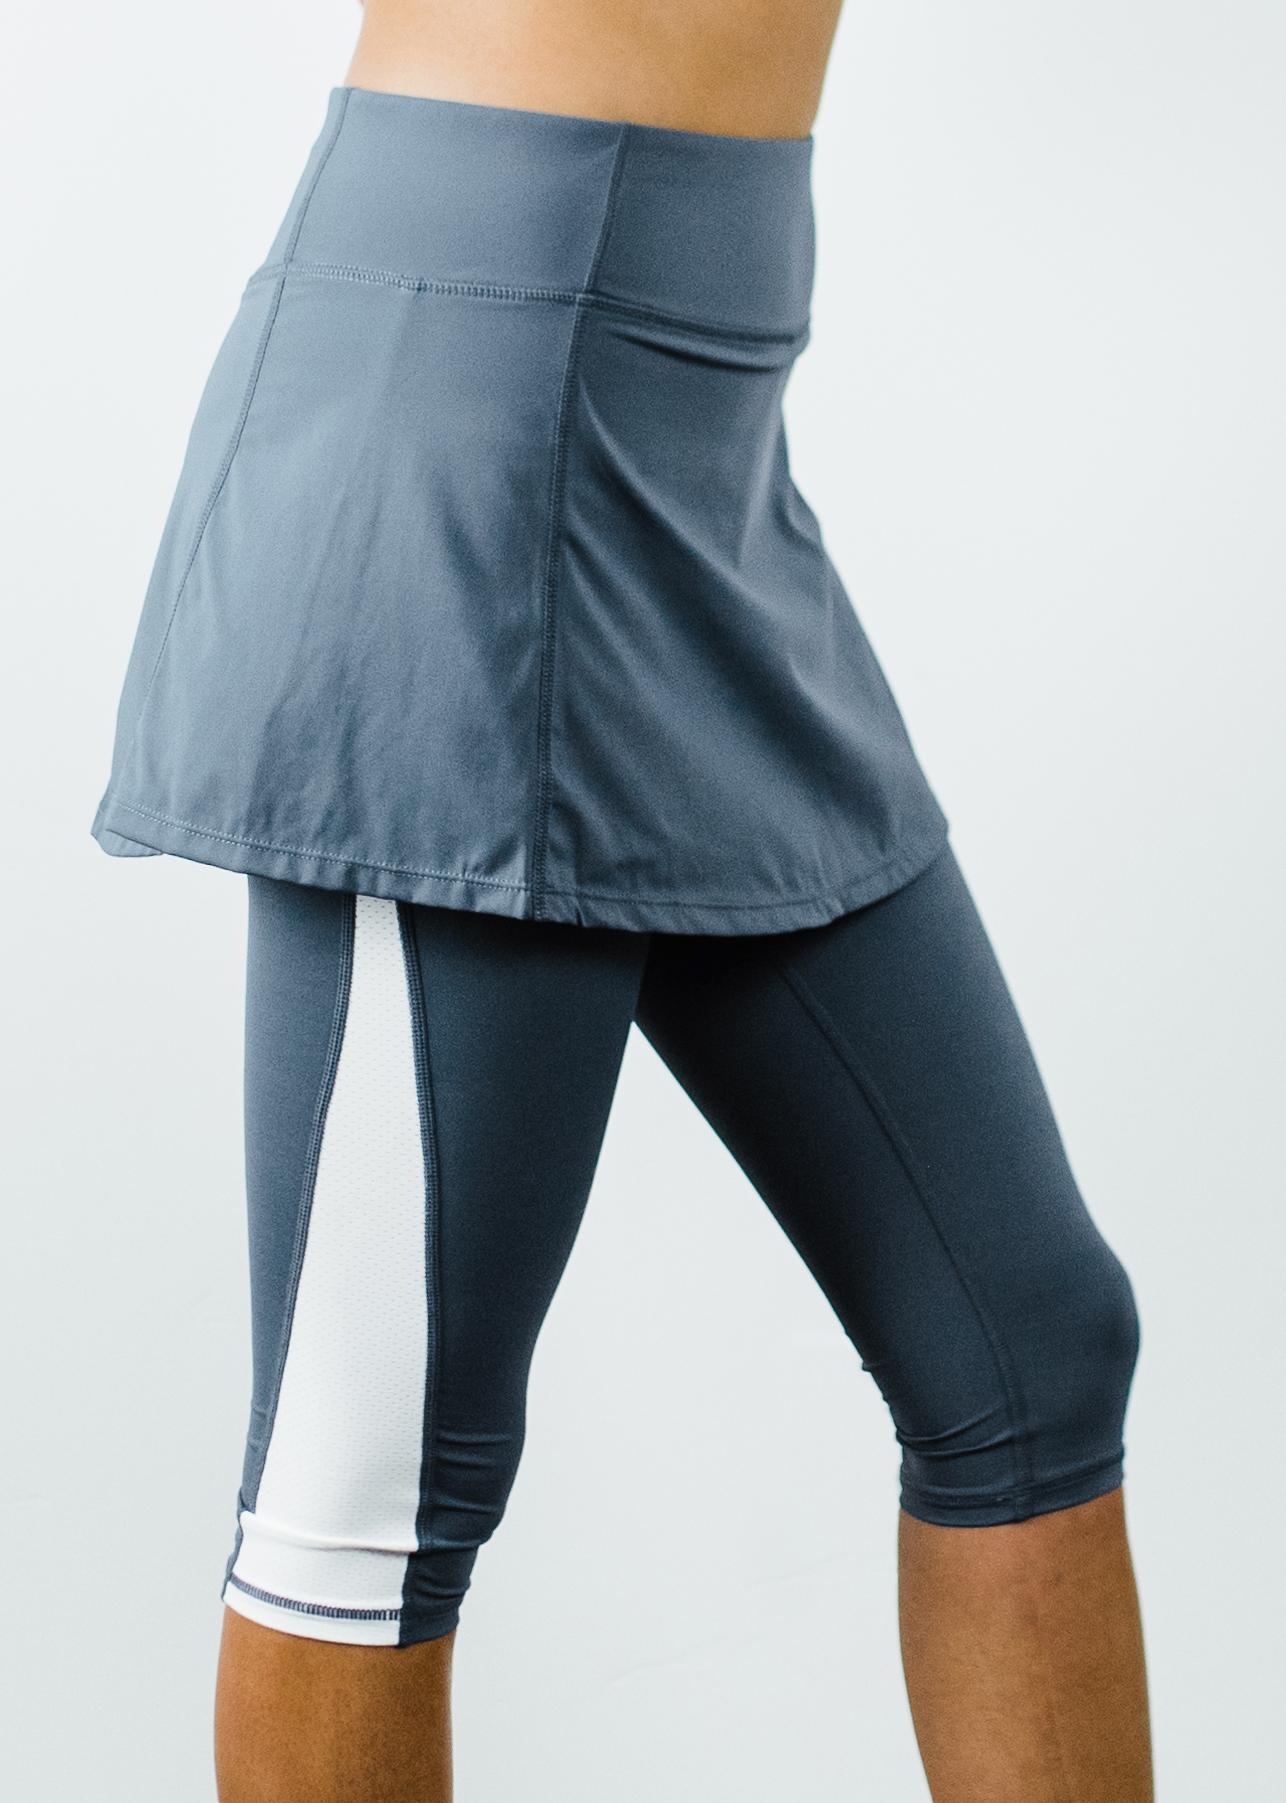 Heather Grey Leggings with Skirt – Sol Sister Sport-chantamquoc.vn